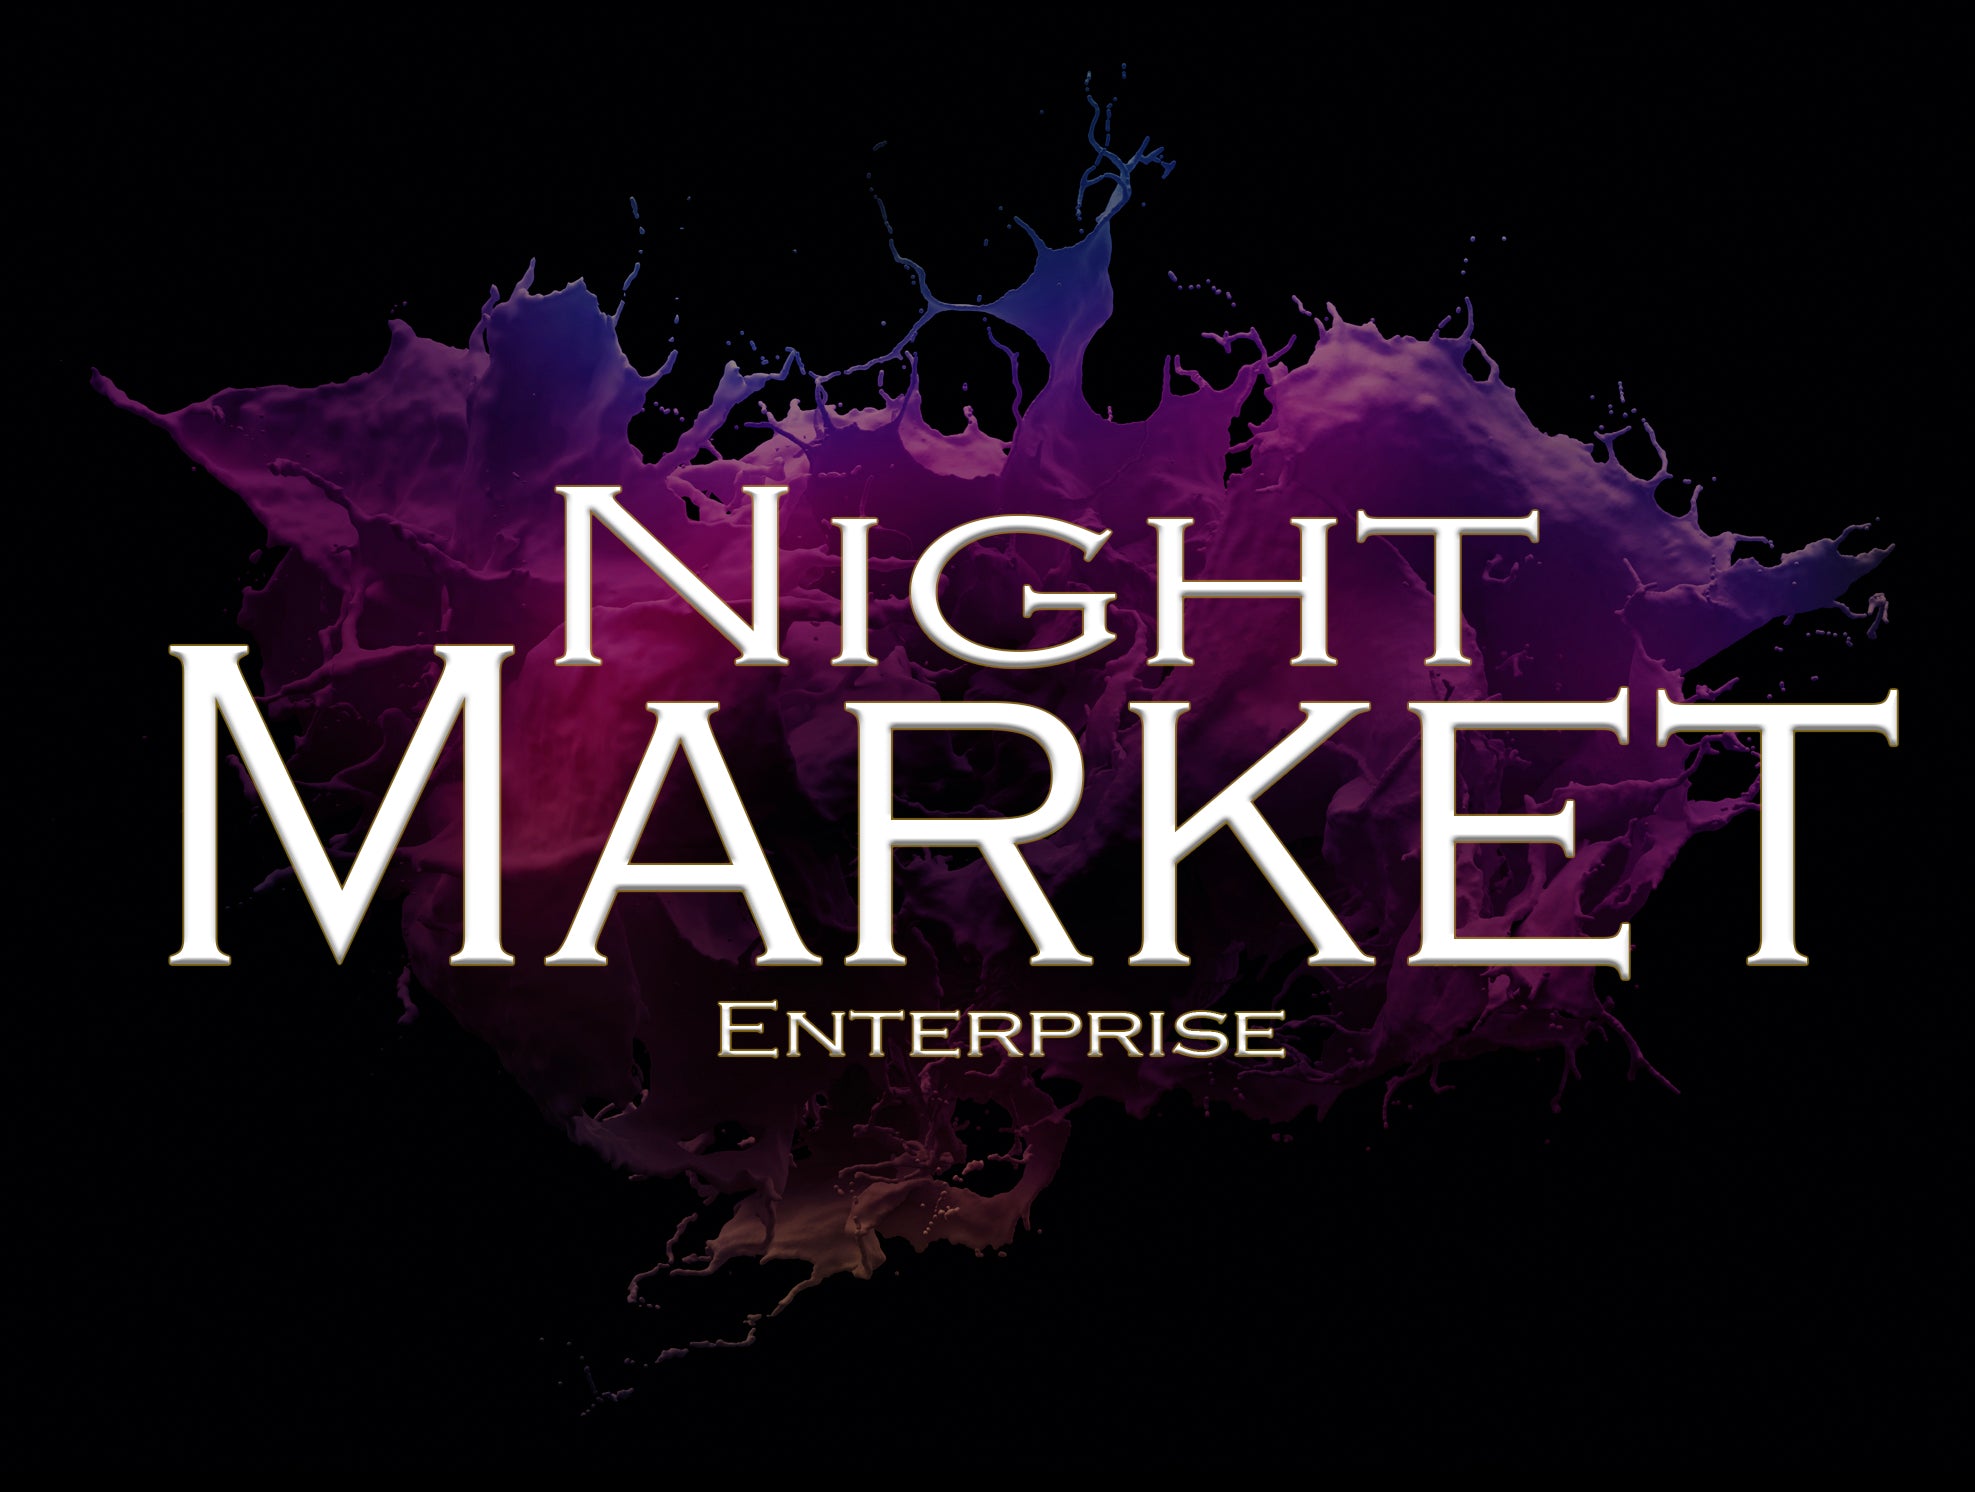 Night Market Enterprise Ltd